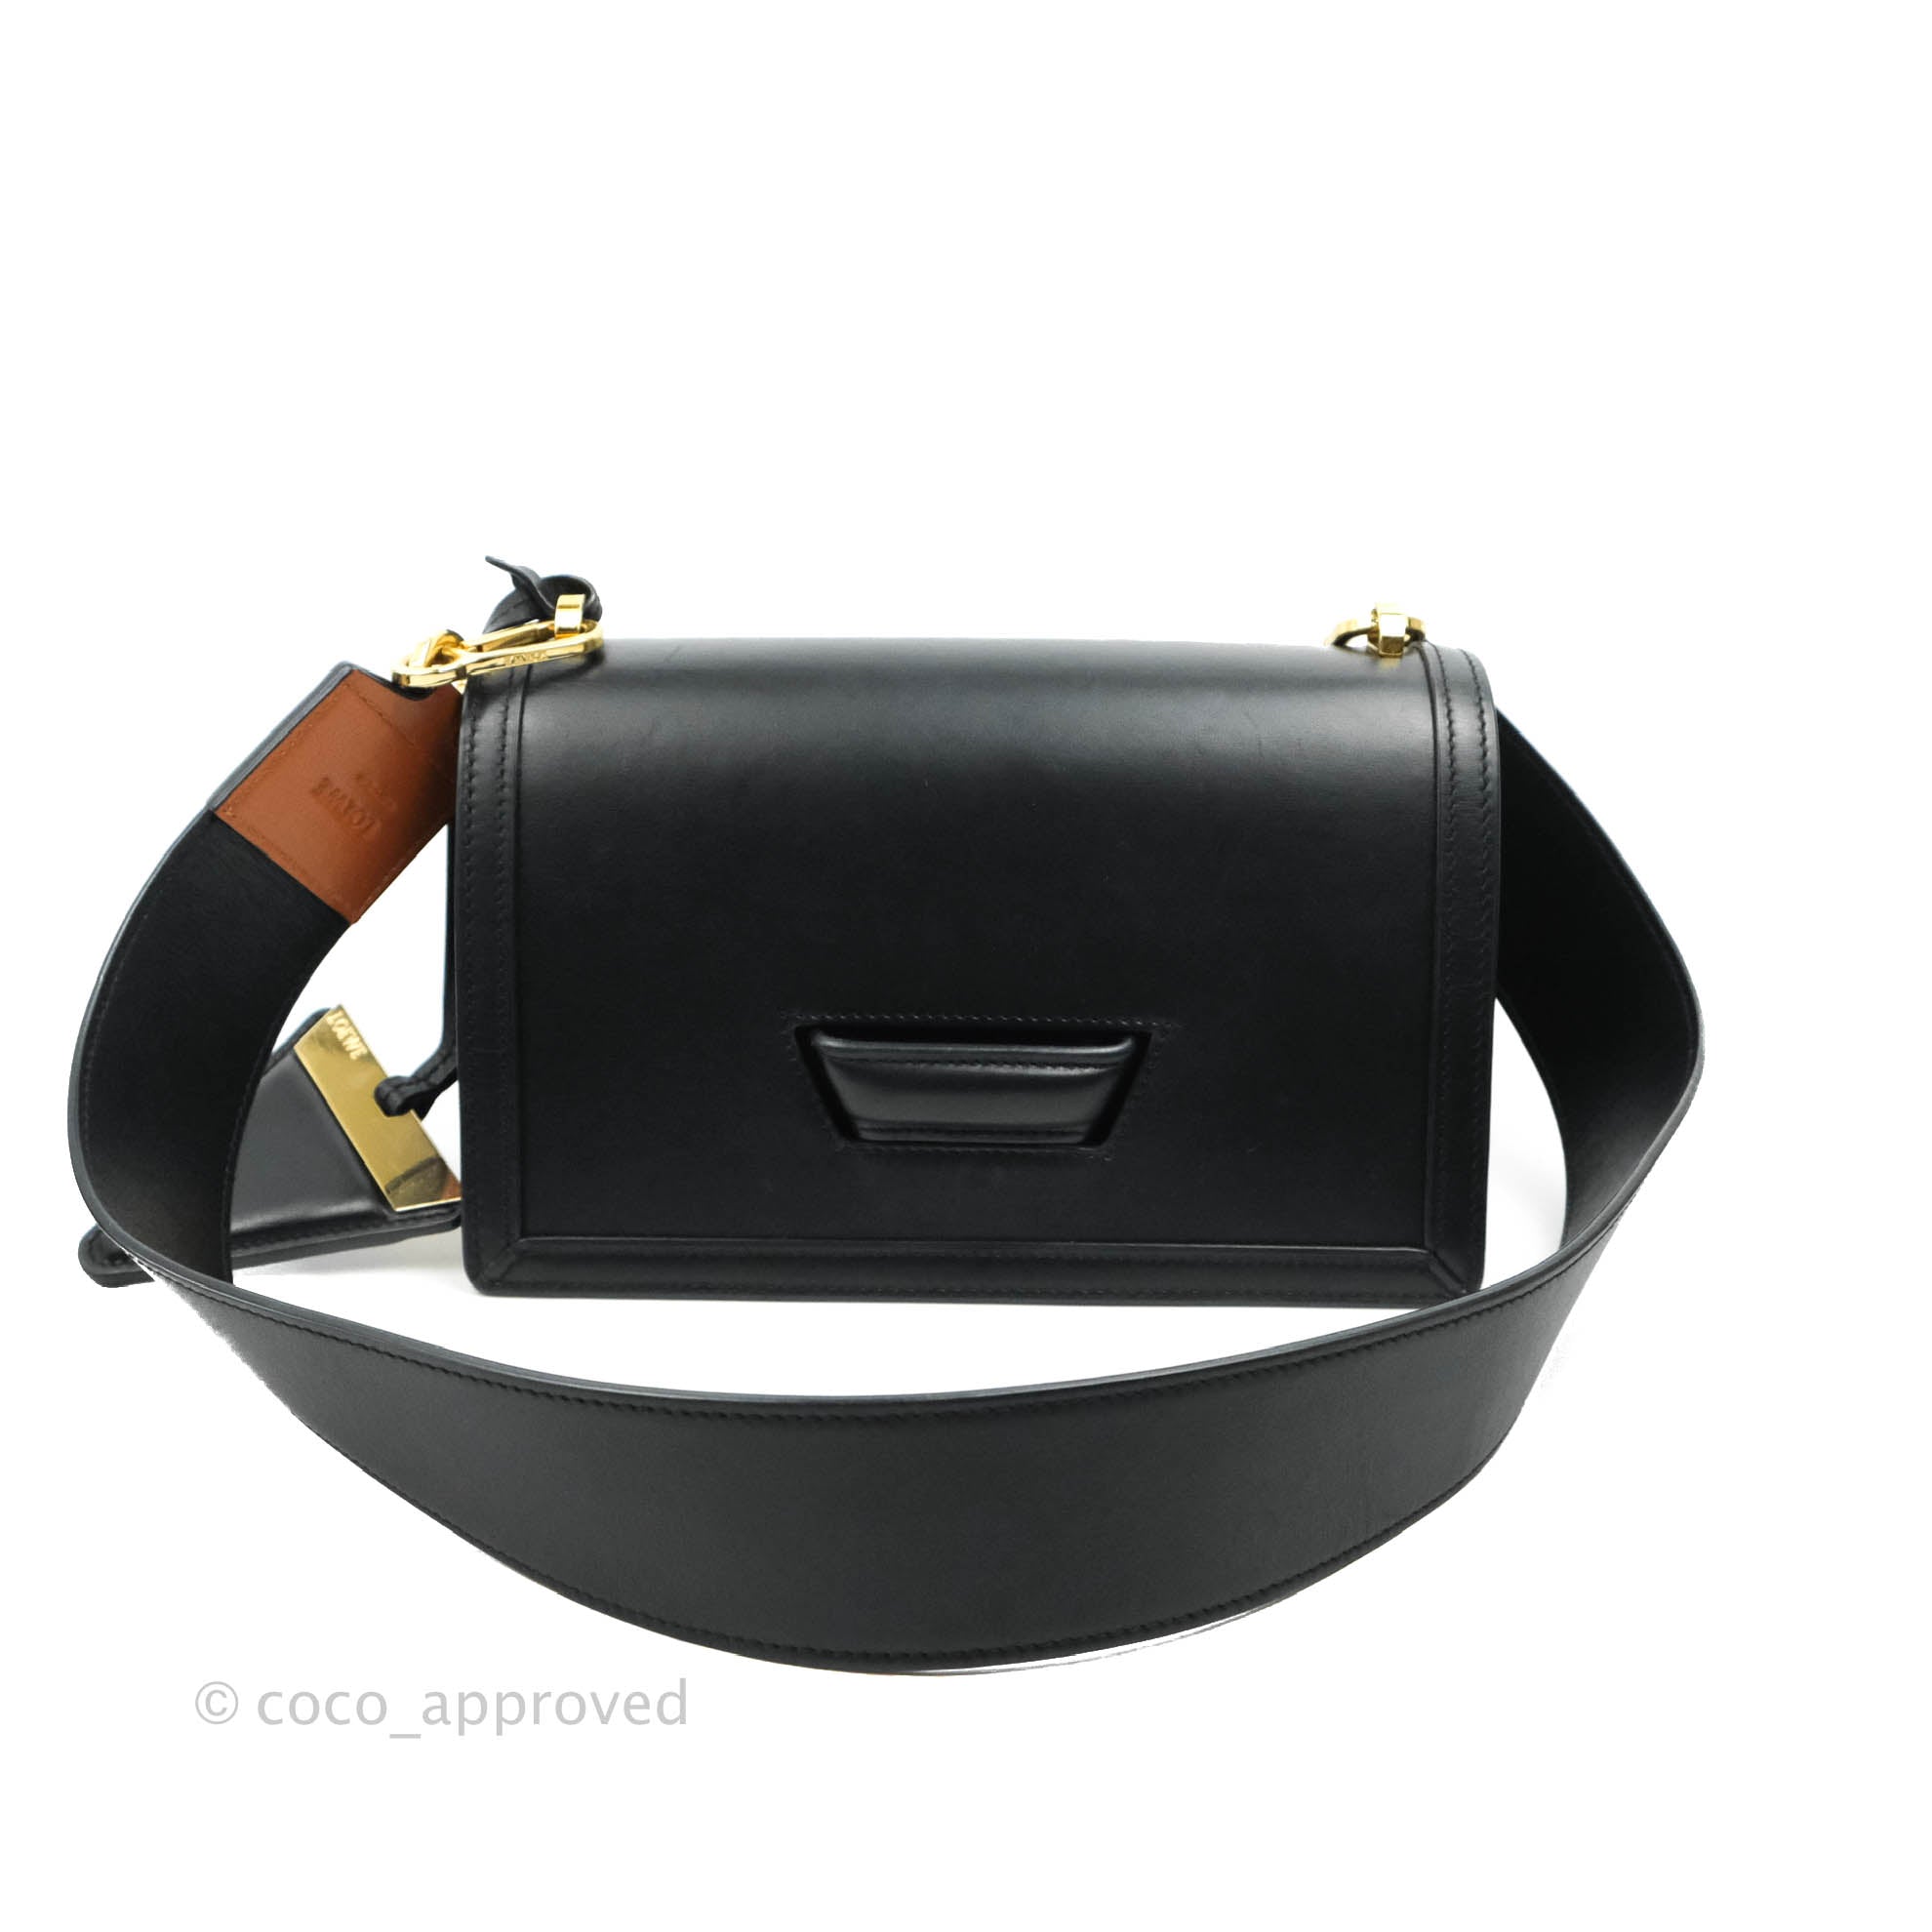 muy agradable Sinceramente embotellamiento Loewe Bolso Barcelona Negro Black Bag – Coco Approved Studio